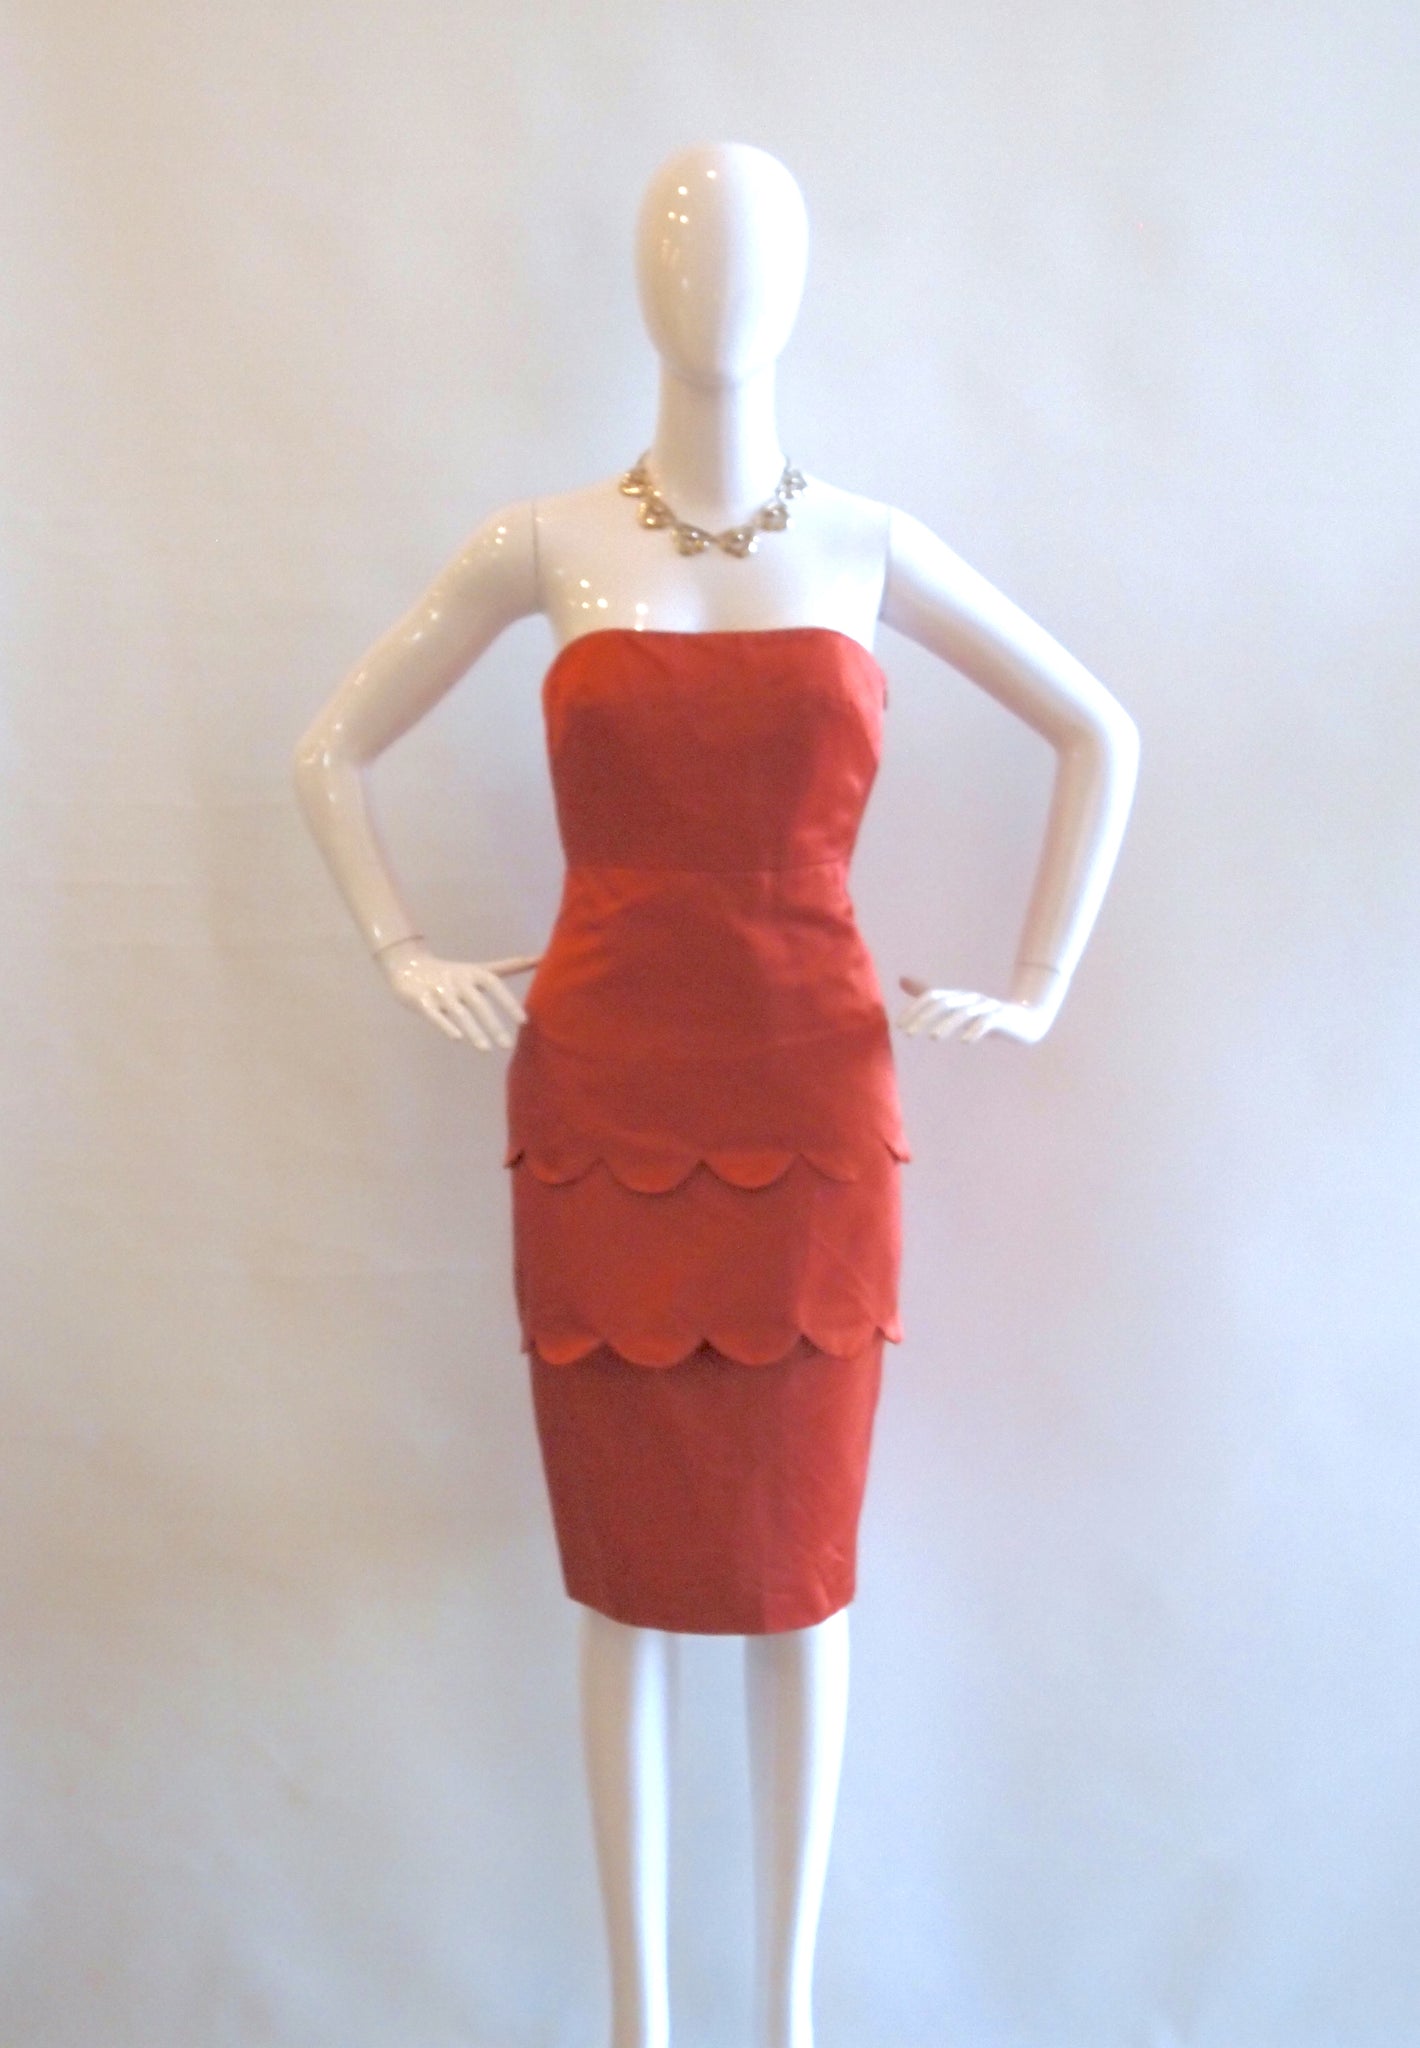 Lela Rose Sand-colored scallop bustier dress